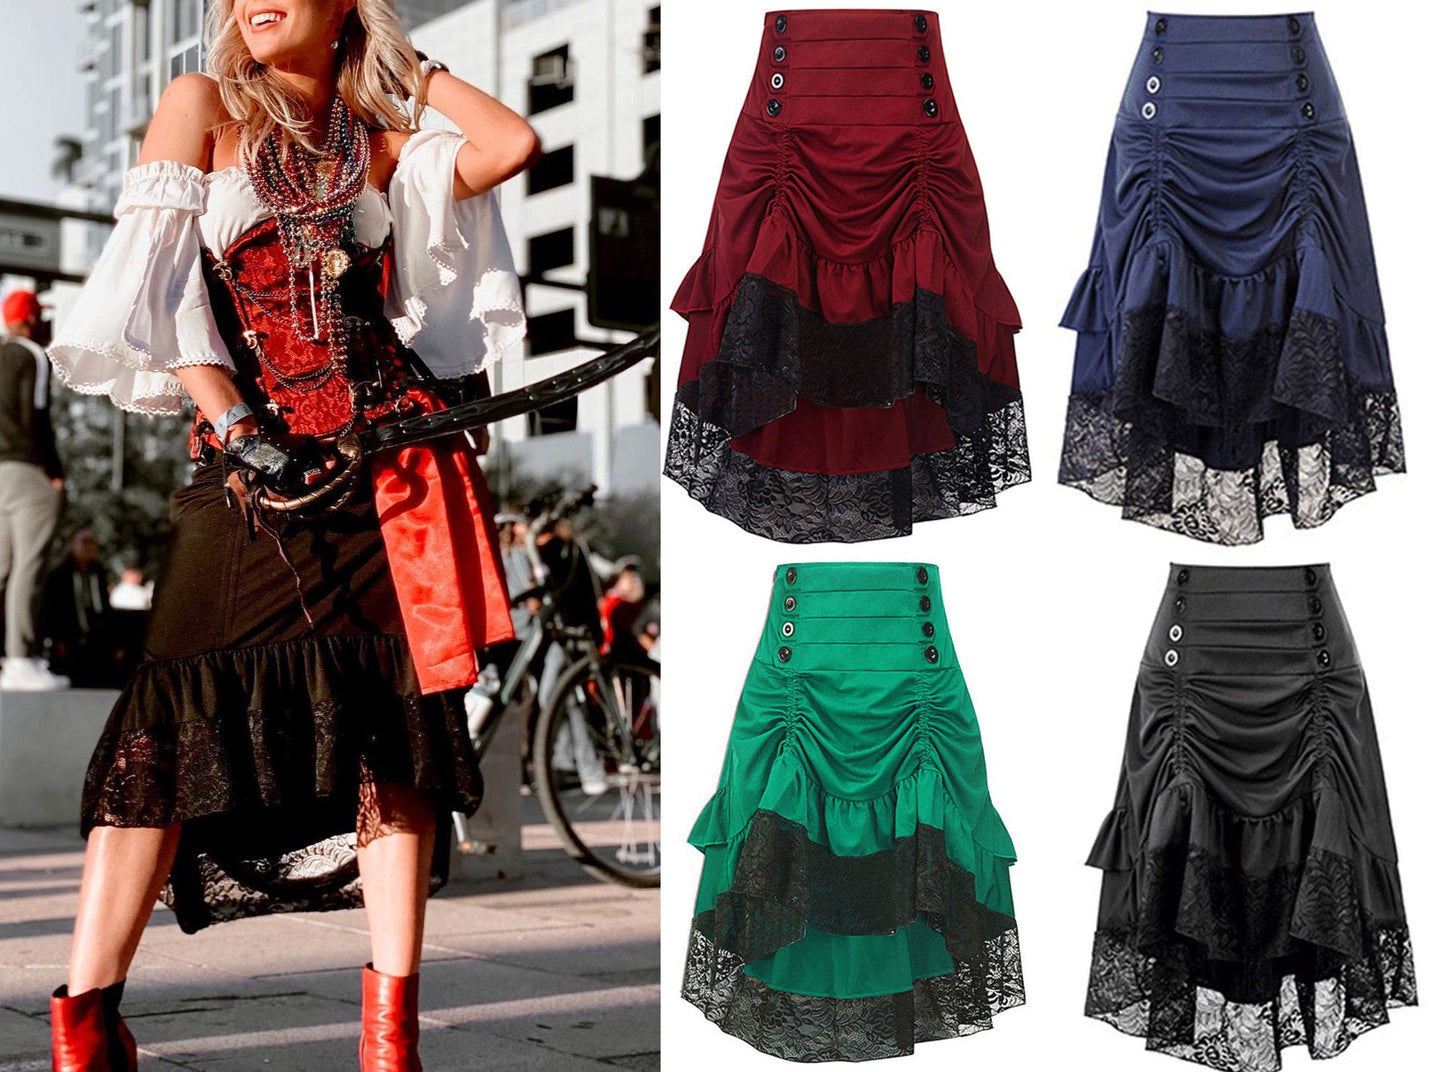 Women's Punk Style Skirt